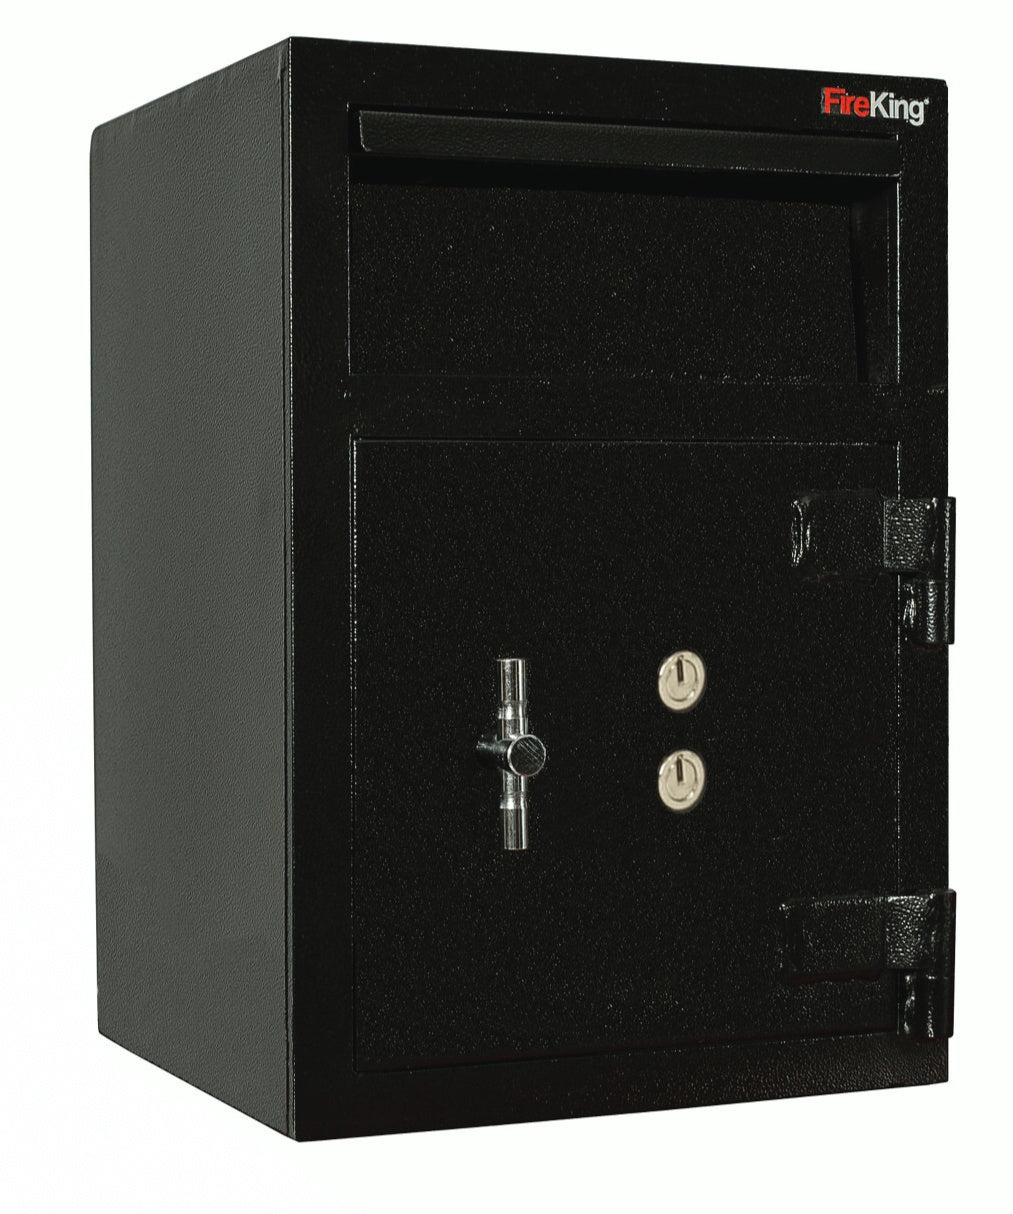 FireKing MB2014K-SG4440 Depository Safe with Dual Key Lock